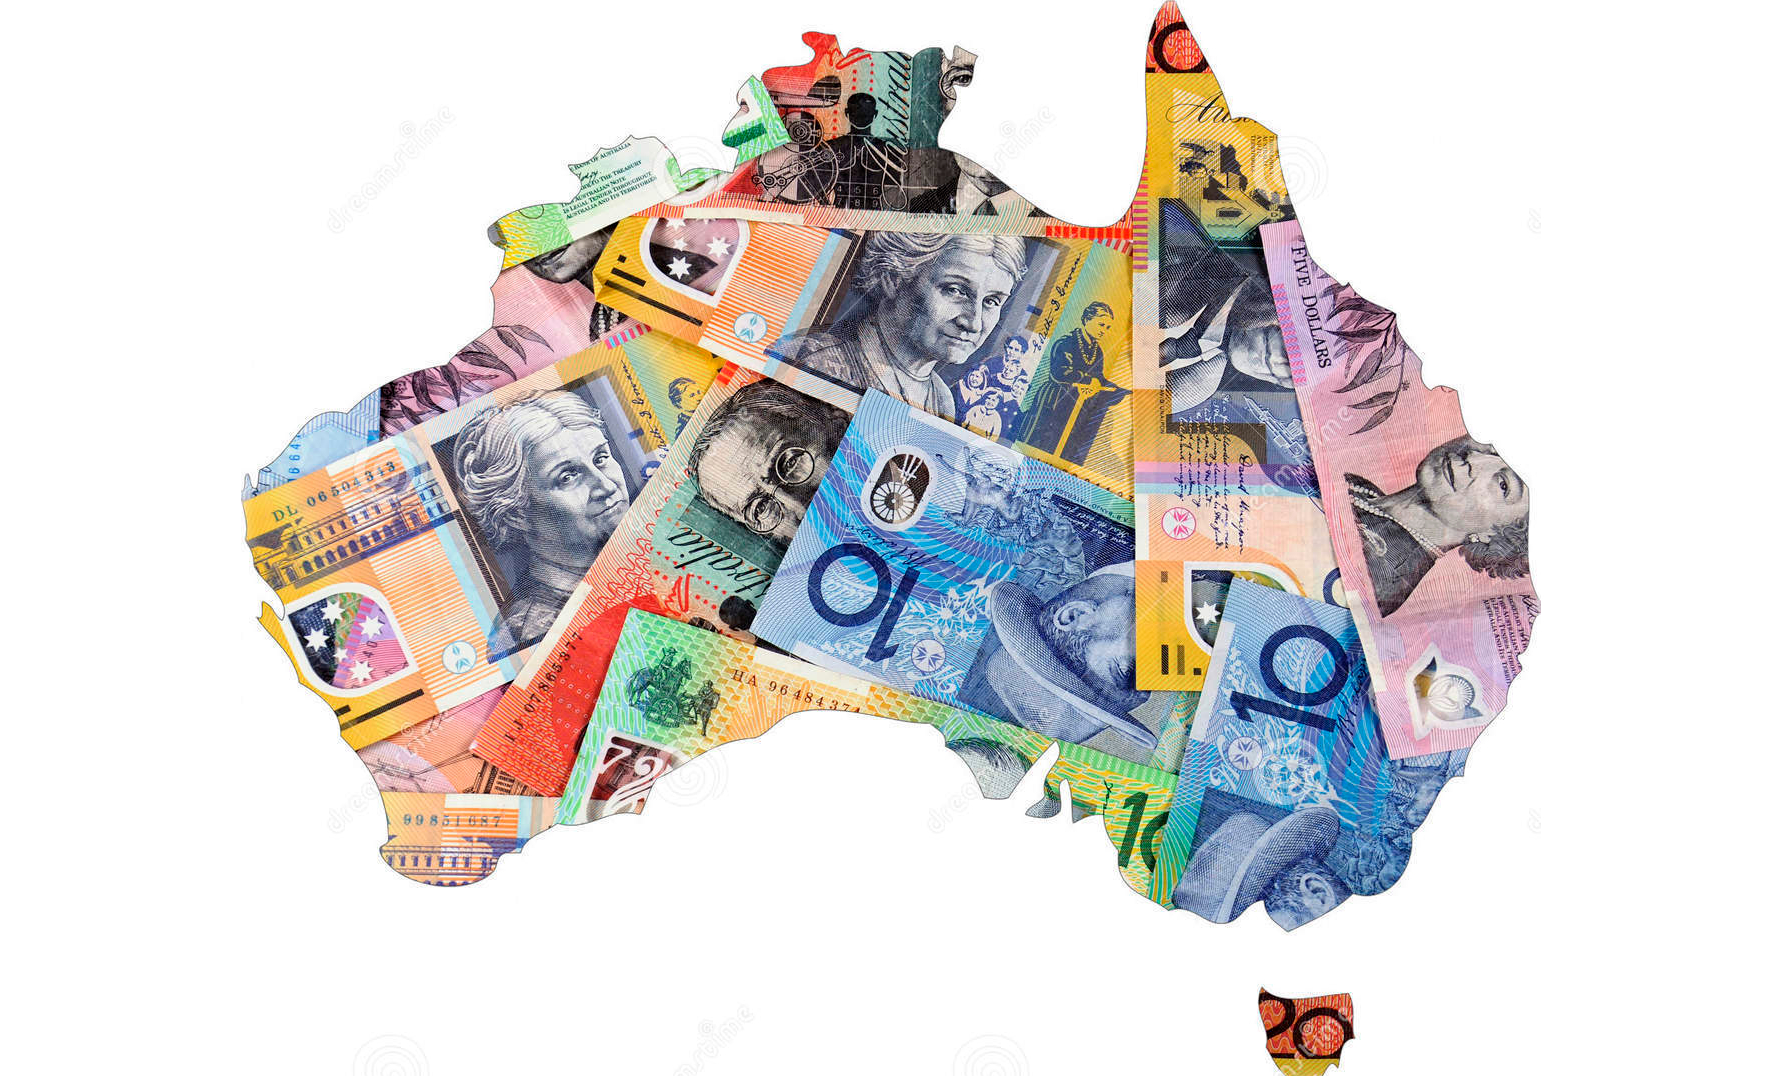 http://www.dreamstime.com/royalty-free-stock-photos-map-australia-australian-money-dollar-notes-image44439588